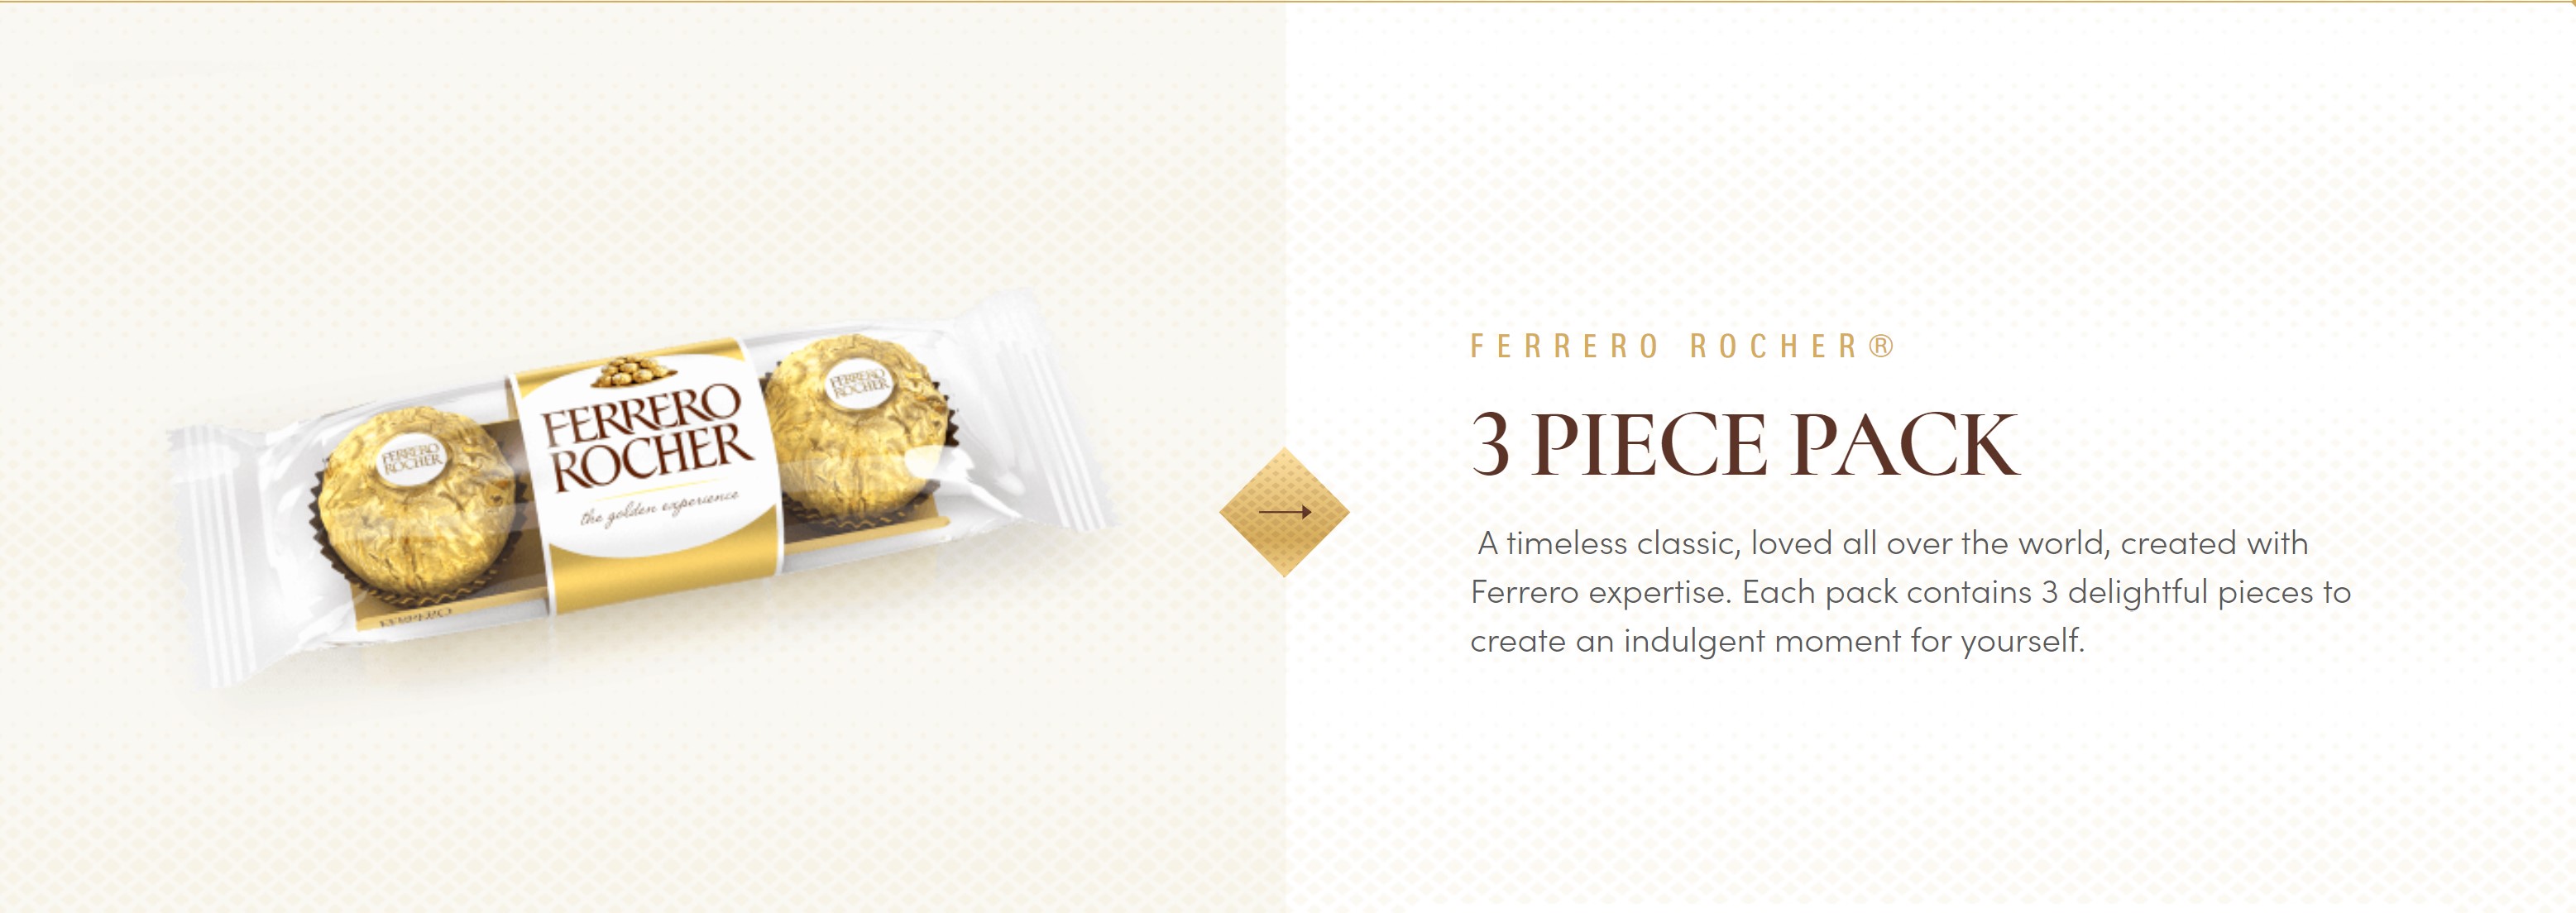 Ferrero Rocher Hermetic - Wellcome Pharmacy